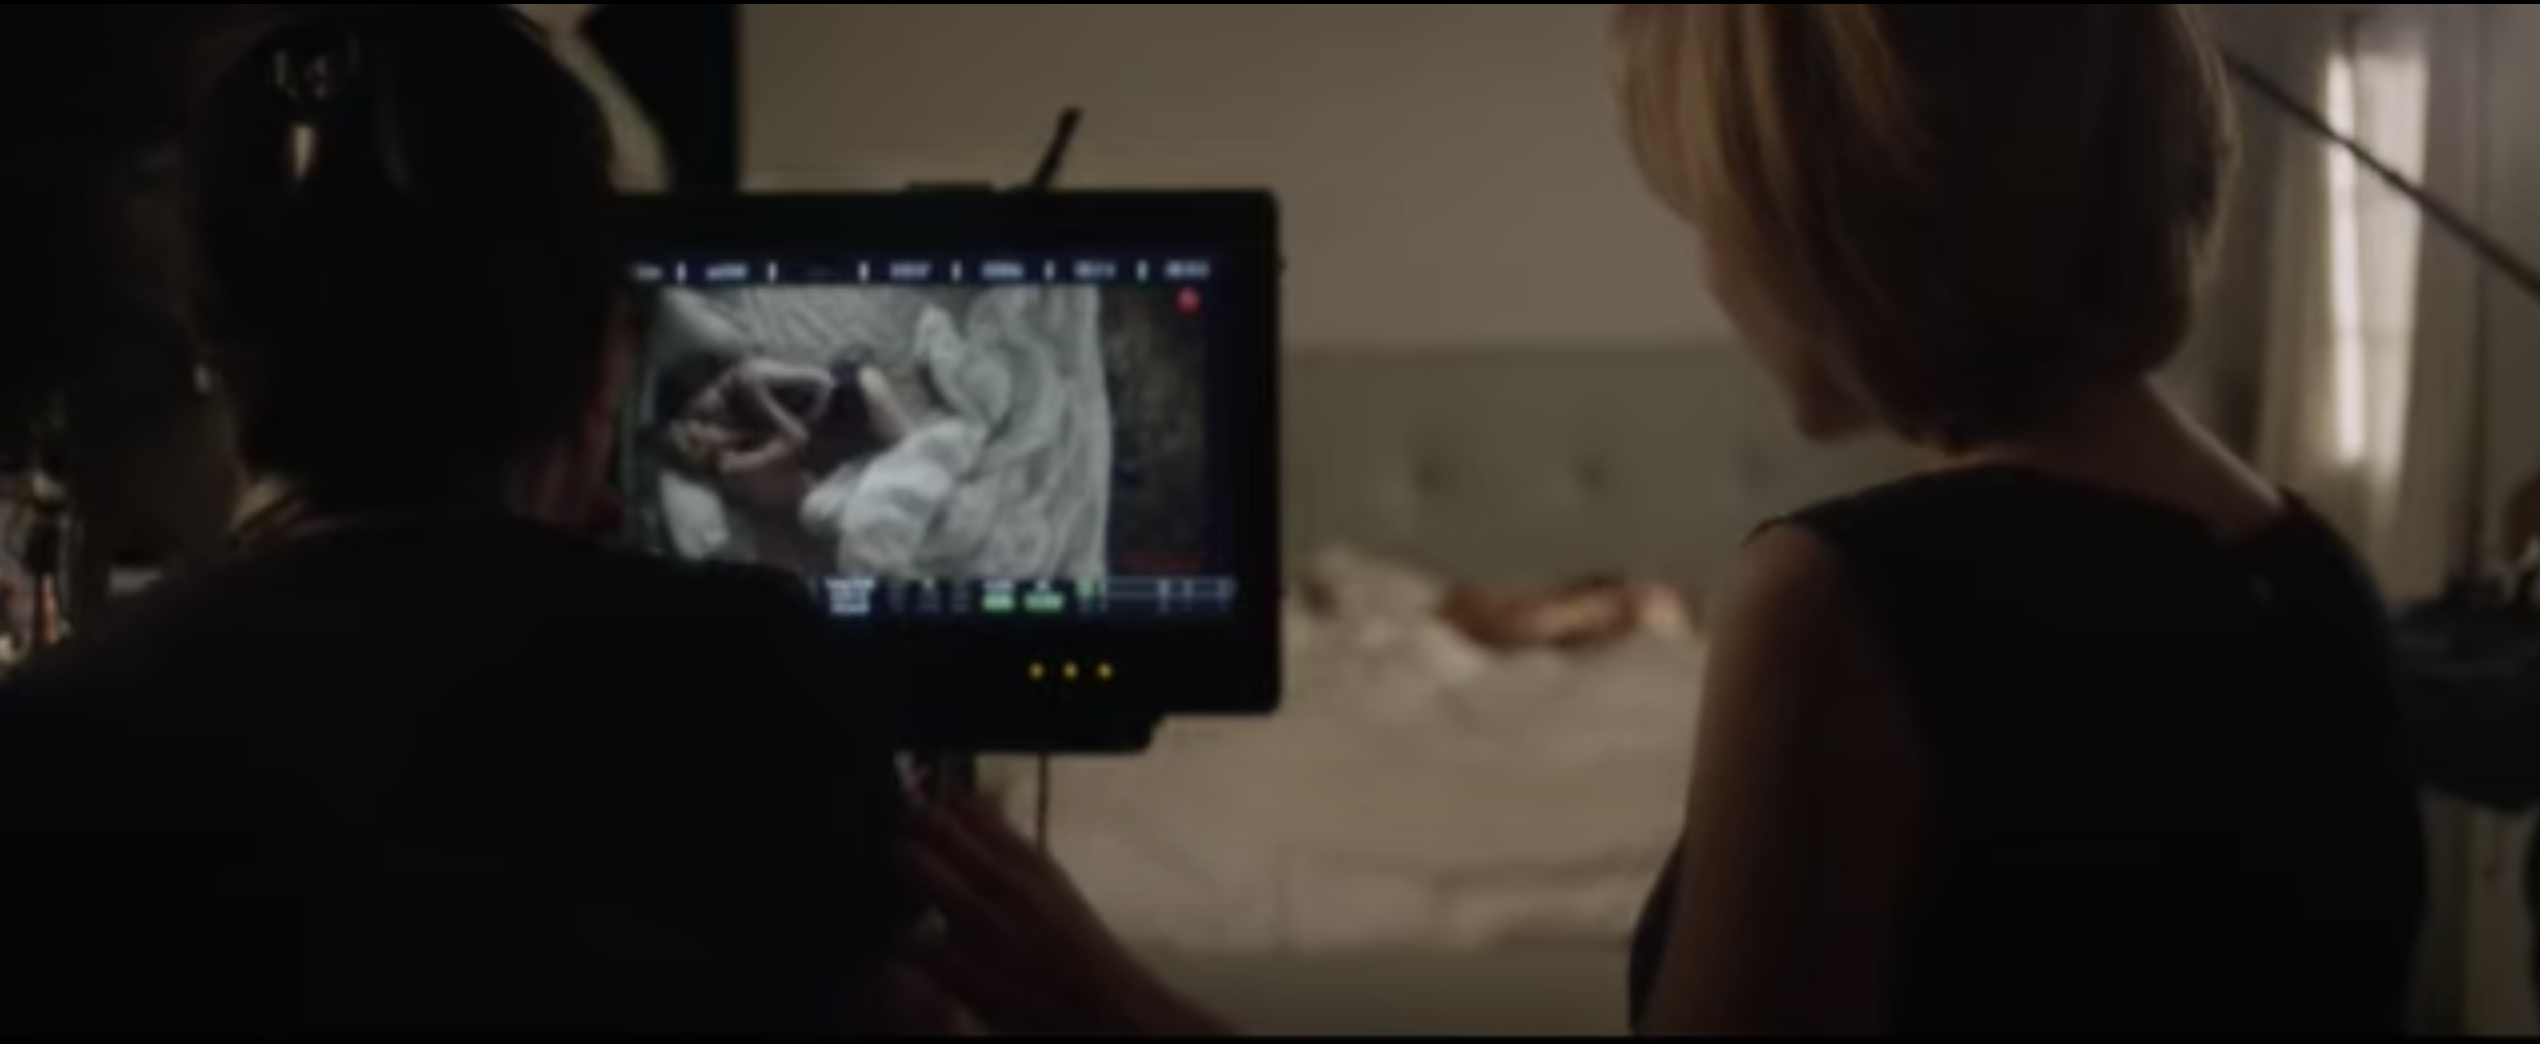     Fig. 2: Una scena del film di Marina Rice Bader Anatomy of Love Seen (2014) - screenshot da terzi.
    